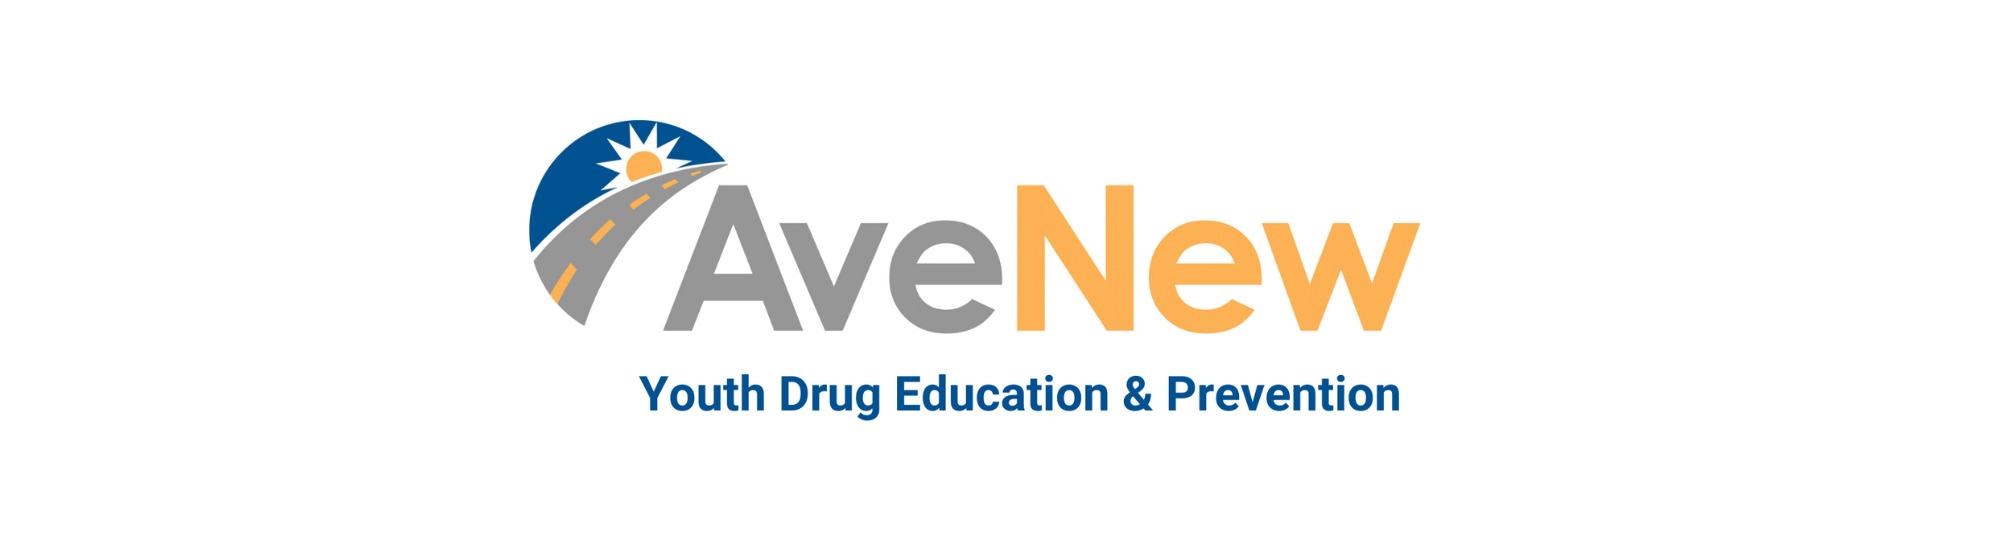 AveNew Youth Drug Education & Prevention